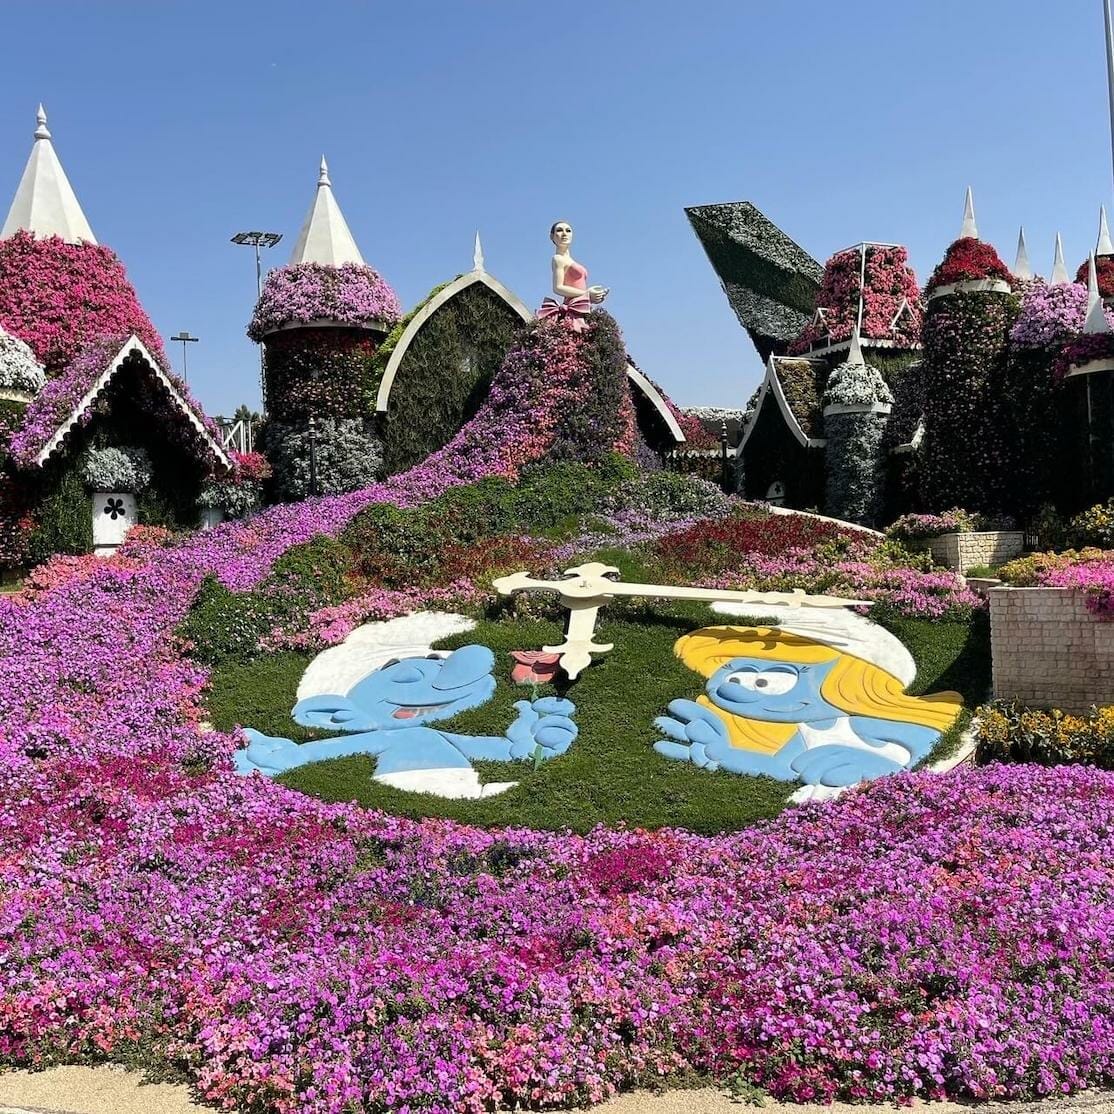 Smurfs Village at Dubai Miracle Garden